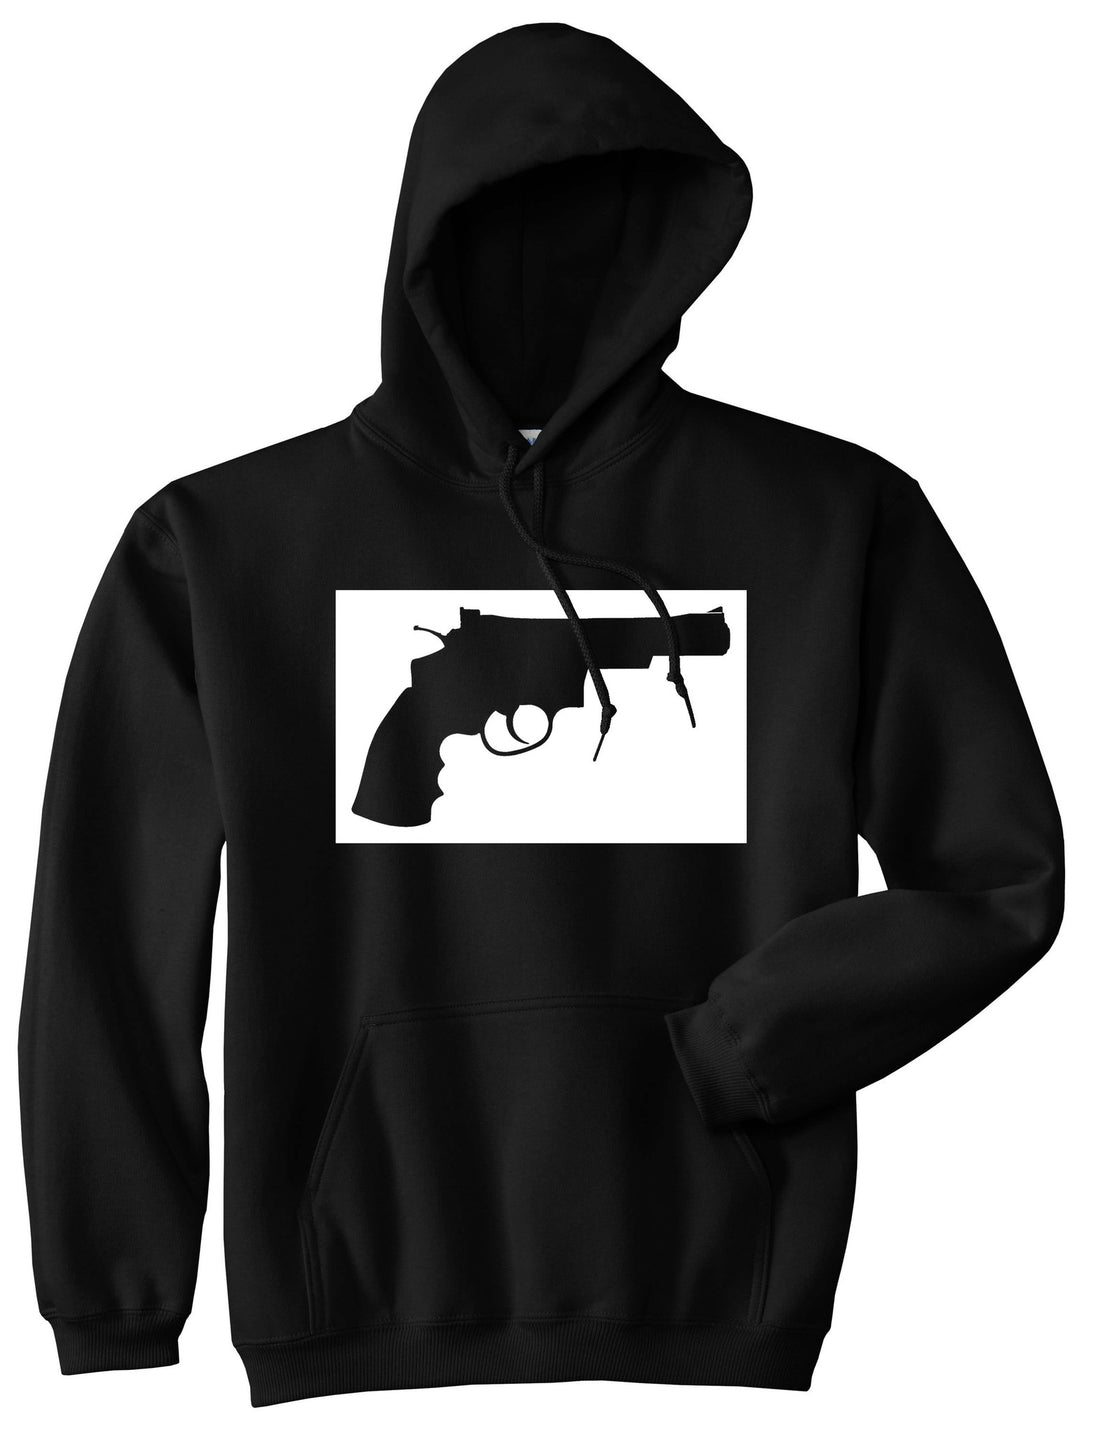 Gun Silhouette Revolver 45 Chrome Boys Kids Pullover Hoodie Hoody in Black By Kings Of NY